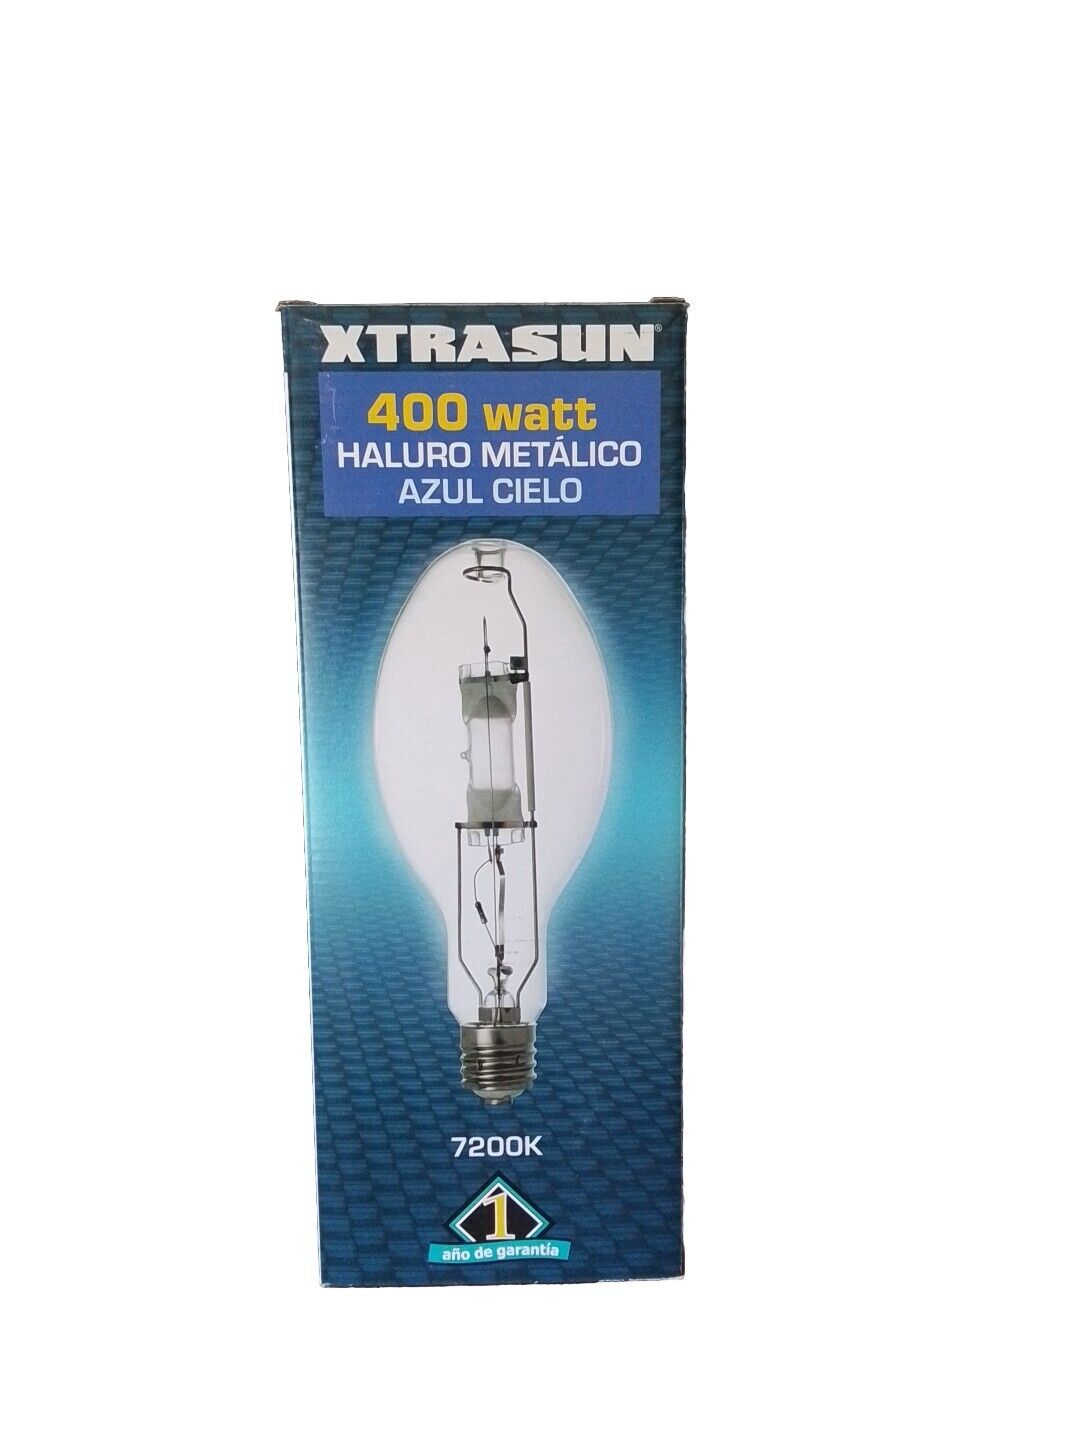 Xtrasun 400W 400 Watt MH Metal Halide Bulb Lamp Sky Blue 7200k 